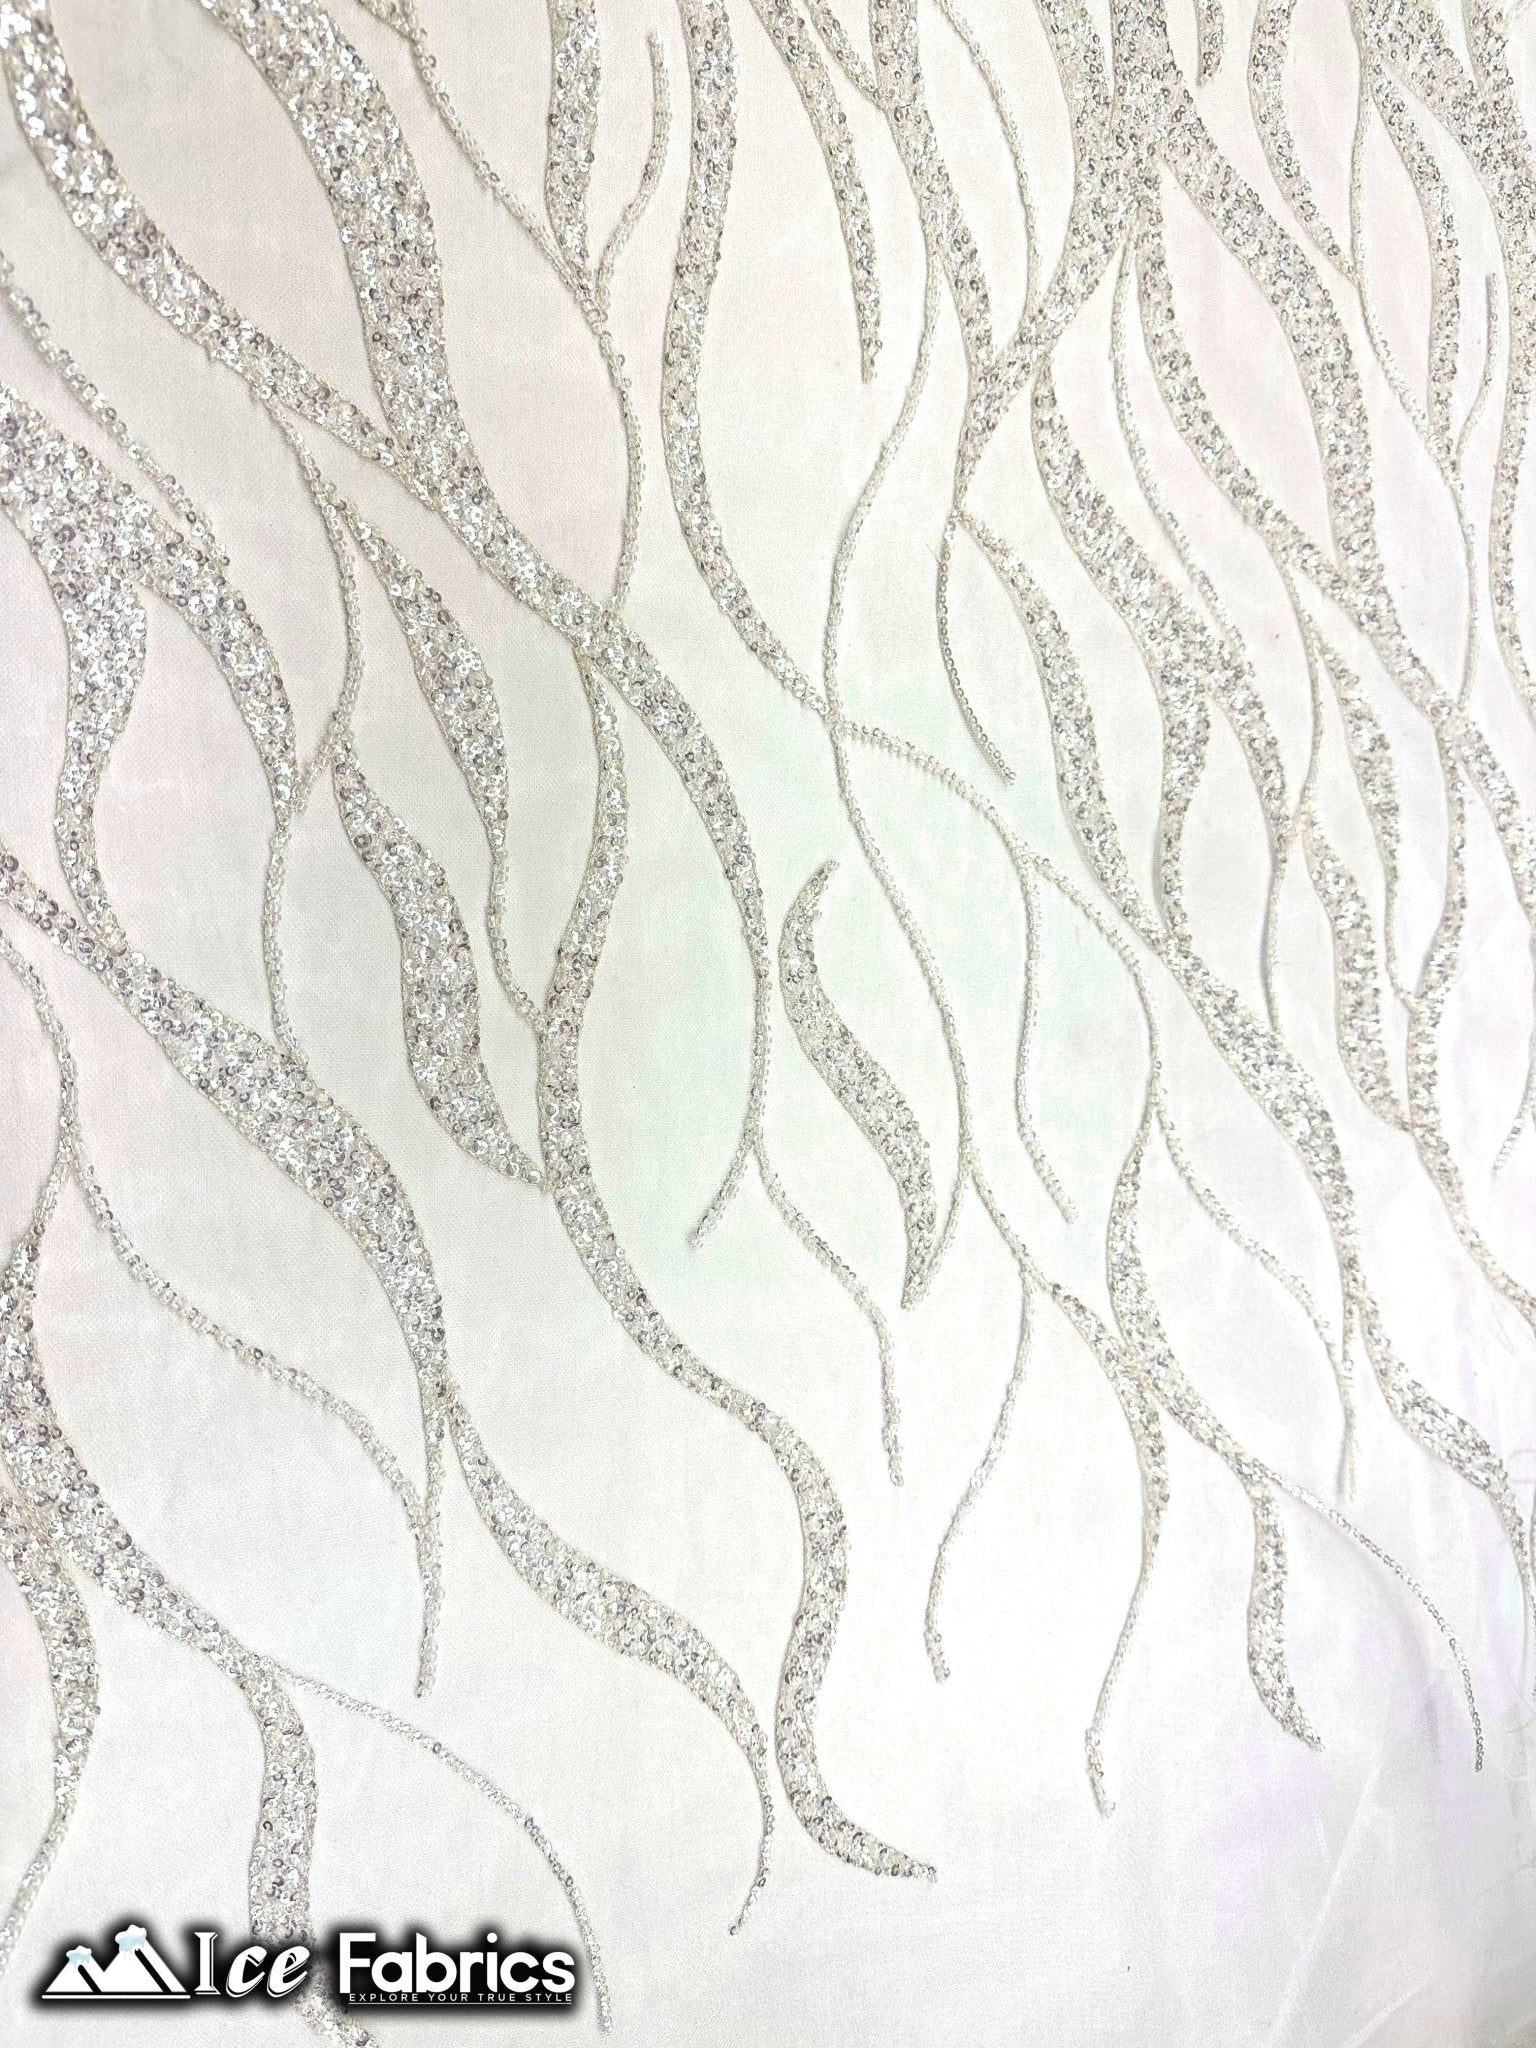 Elegant Heavy Beaded Fabric Lace Fabric with SequinICE FABRICSICE FABRICSOff WhiteBy The Yard (54" Wide)Elegant Heavy Beaded Fabric Lace Fabric with Sequin ICE FABRICS Off White